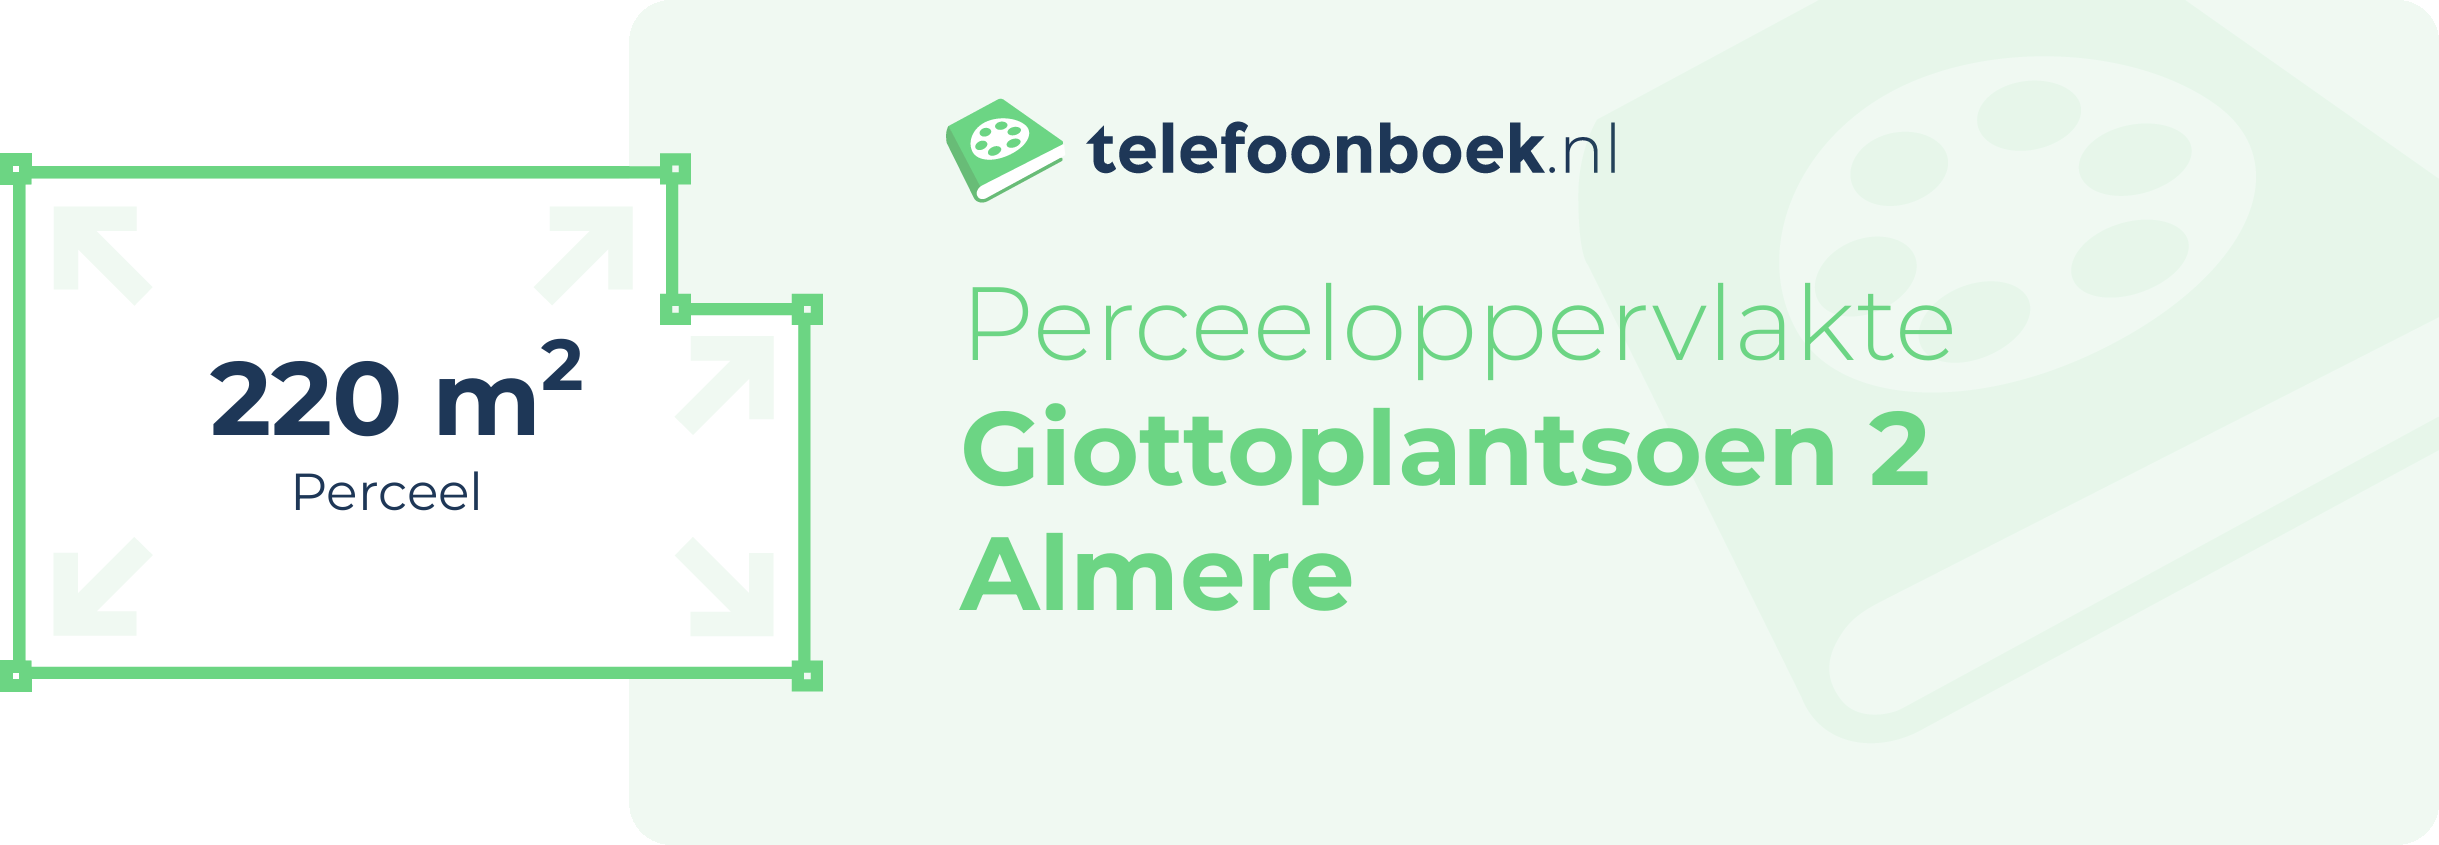 Perceeloppervlakte Giottoplantsoen 2 Almere